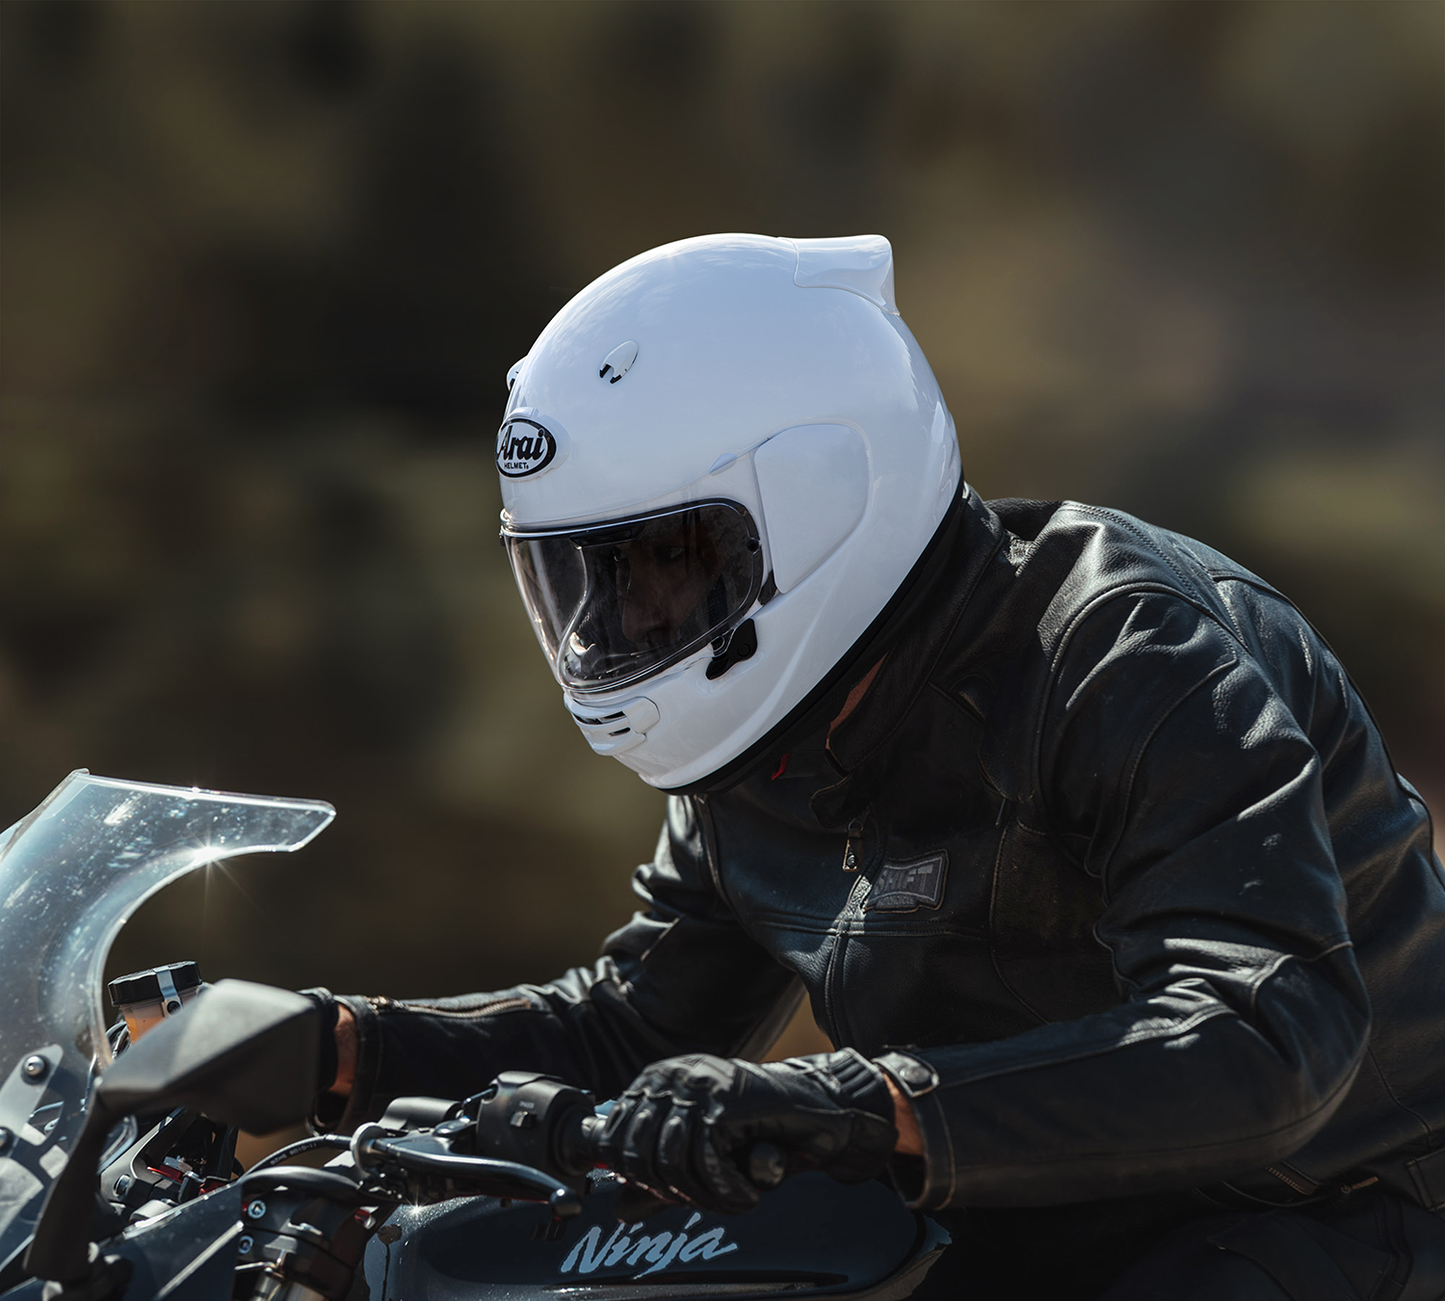 ARAI HELMETS Contour-X Helmet - Solid - Diamond White - Small 0101-16032